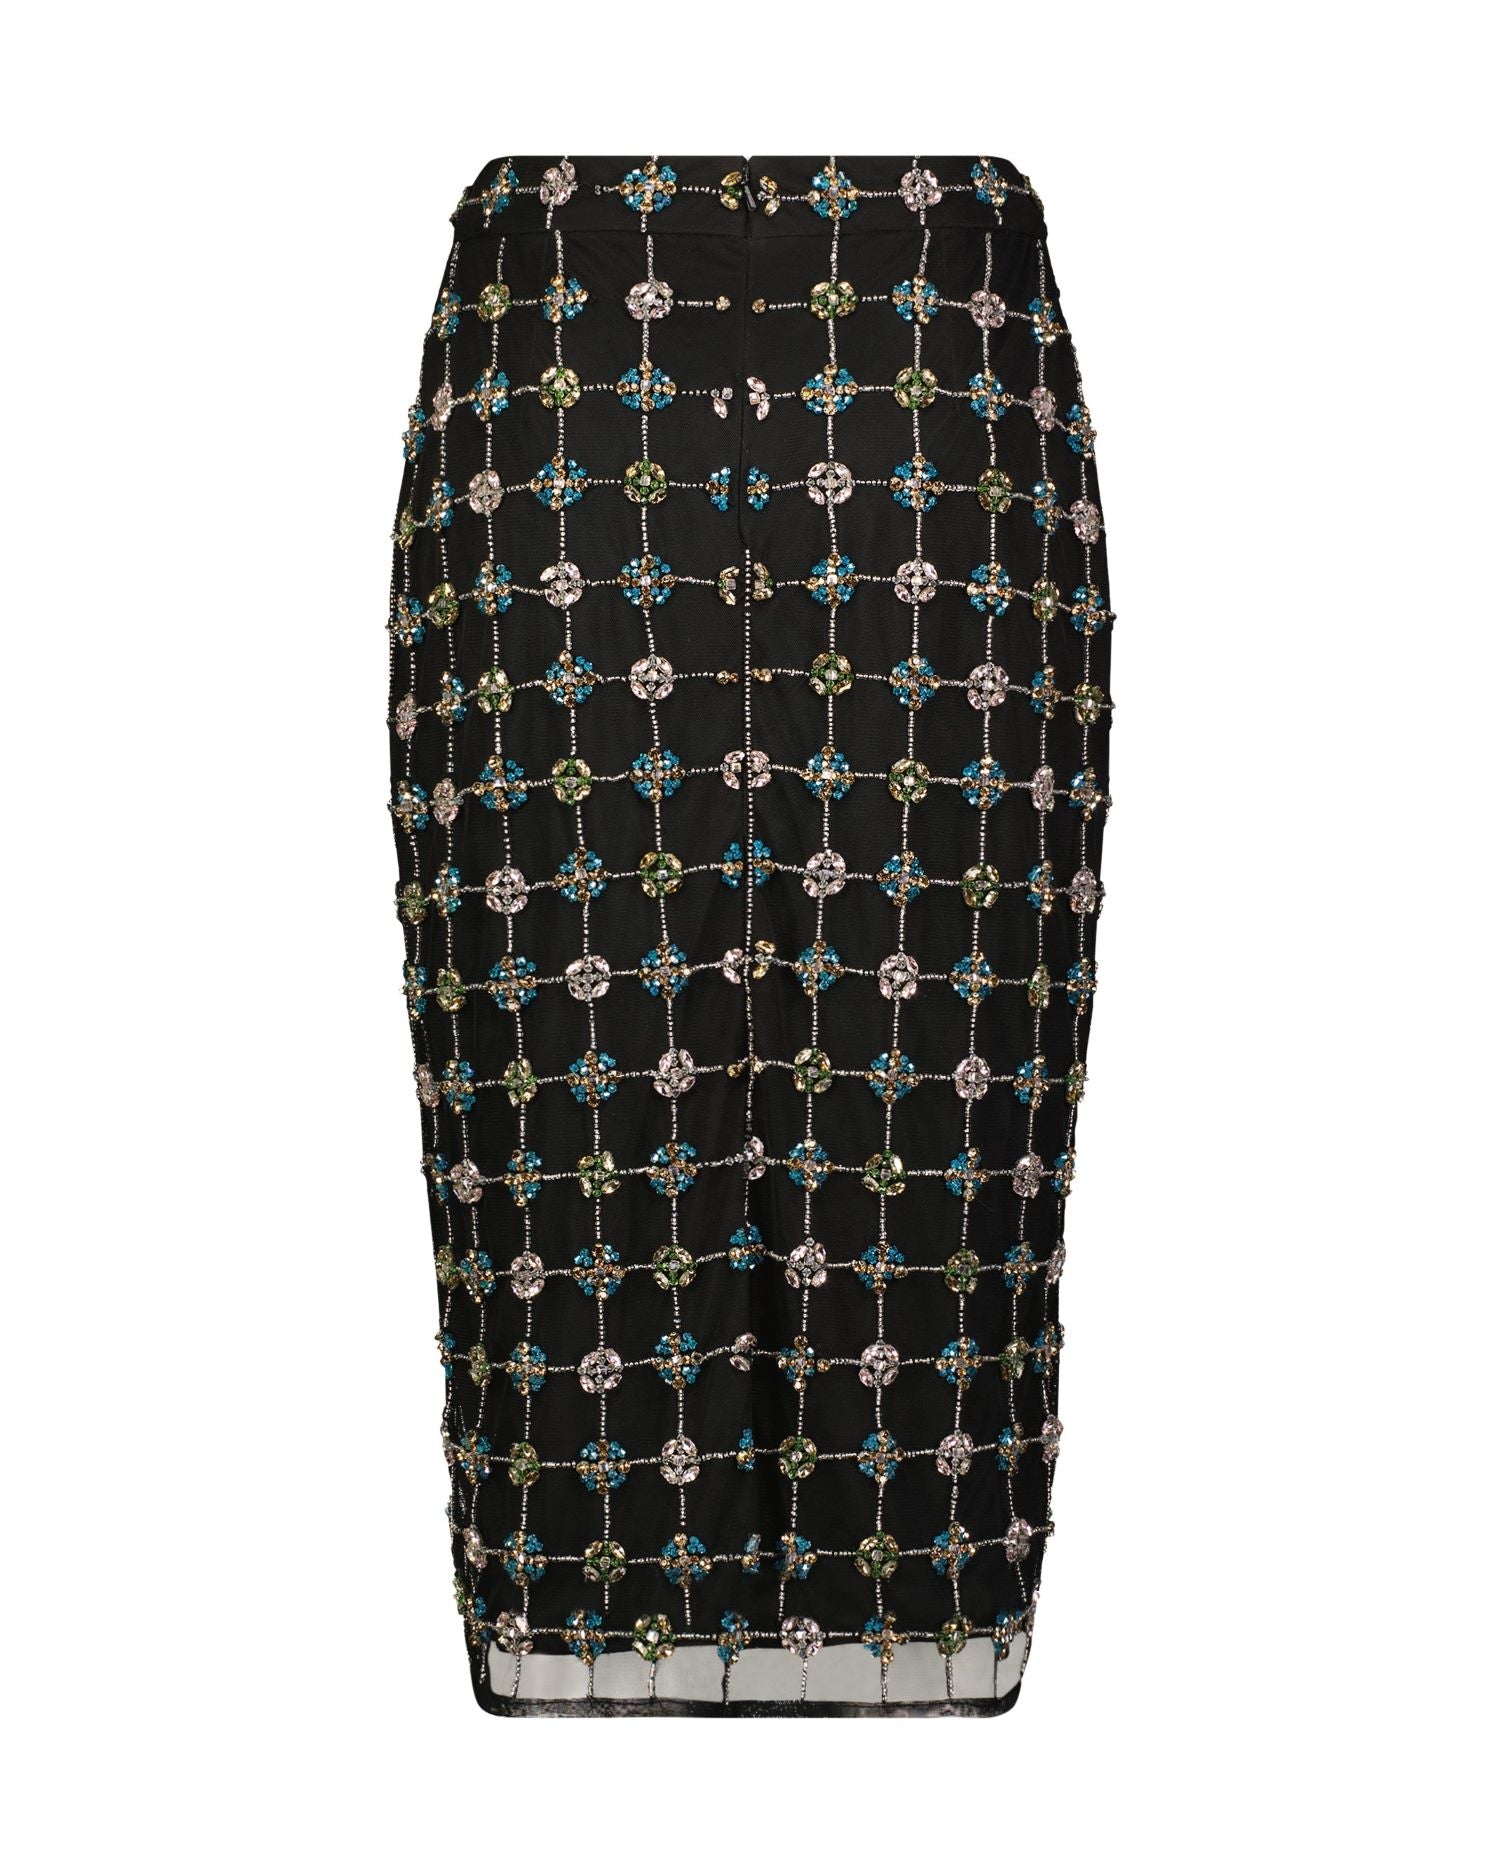 Embellished Geometrical Skirt with Rhinestones